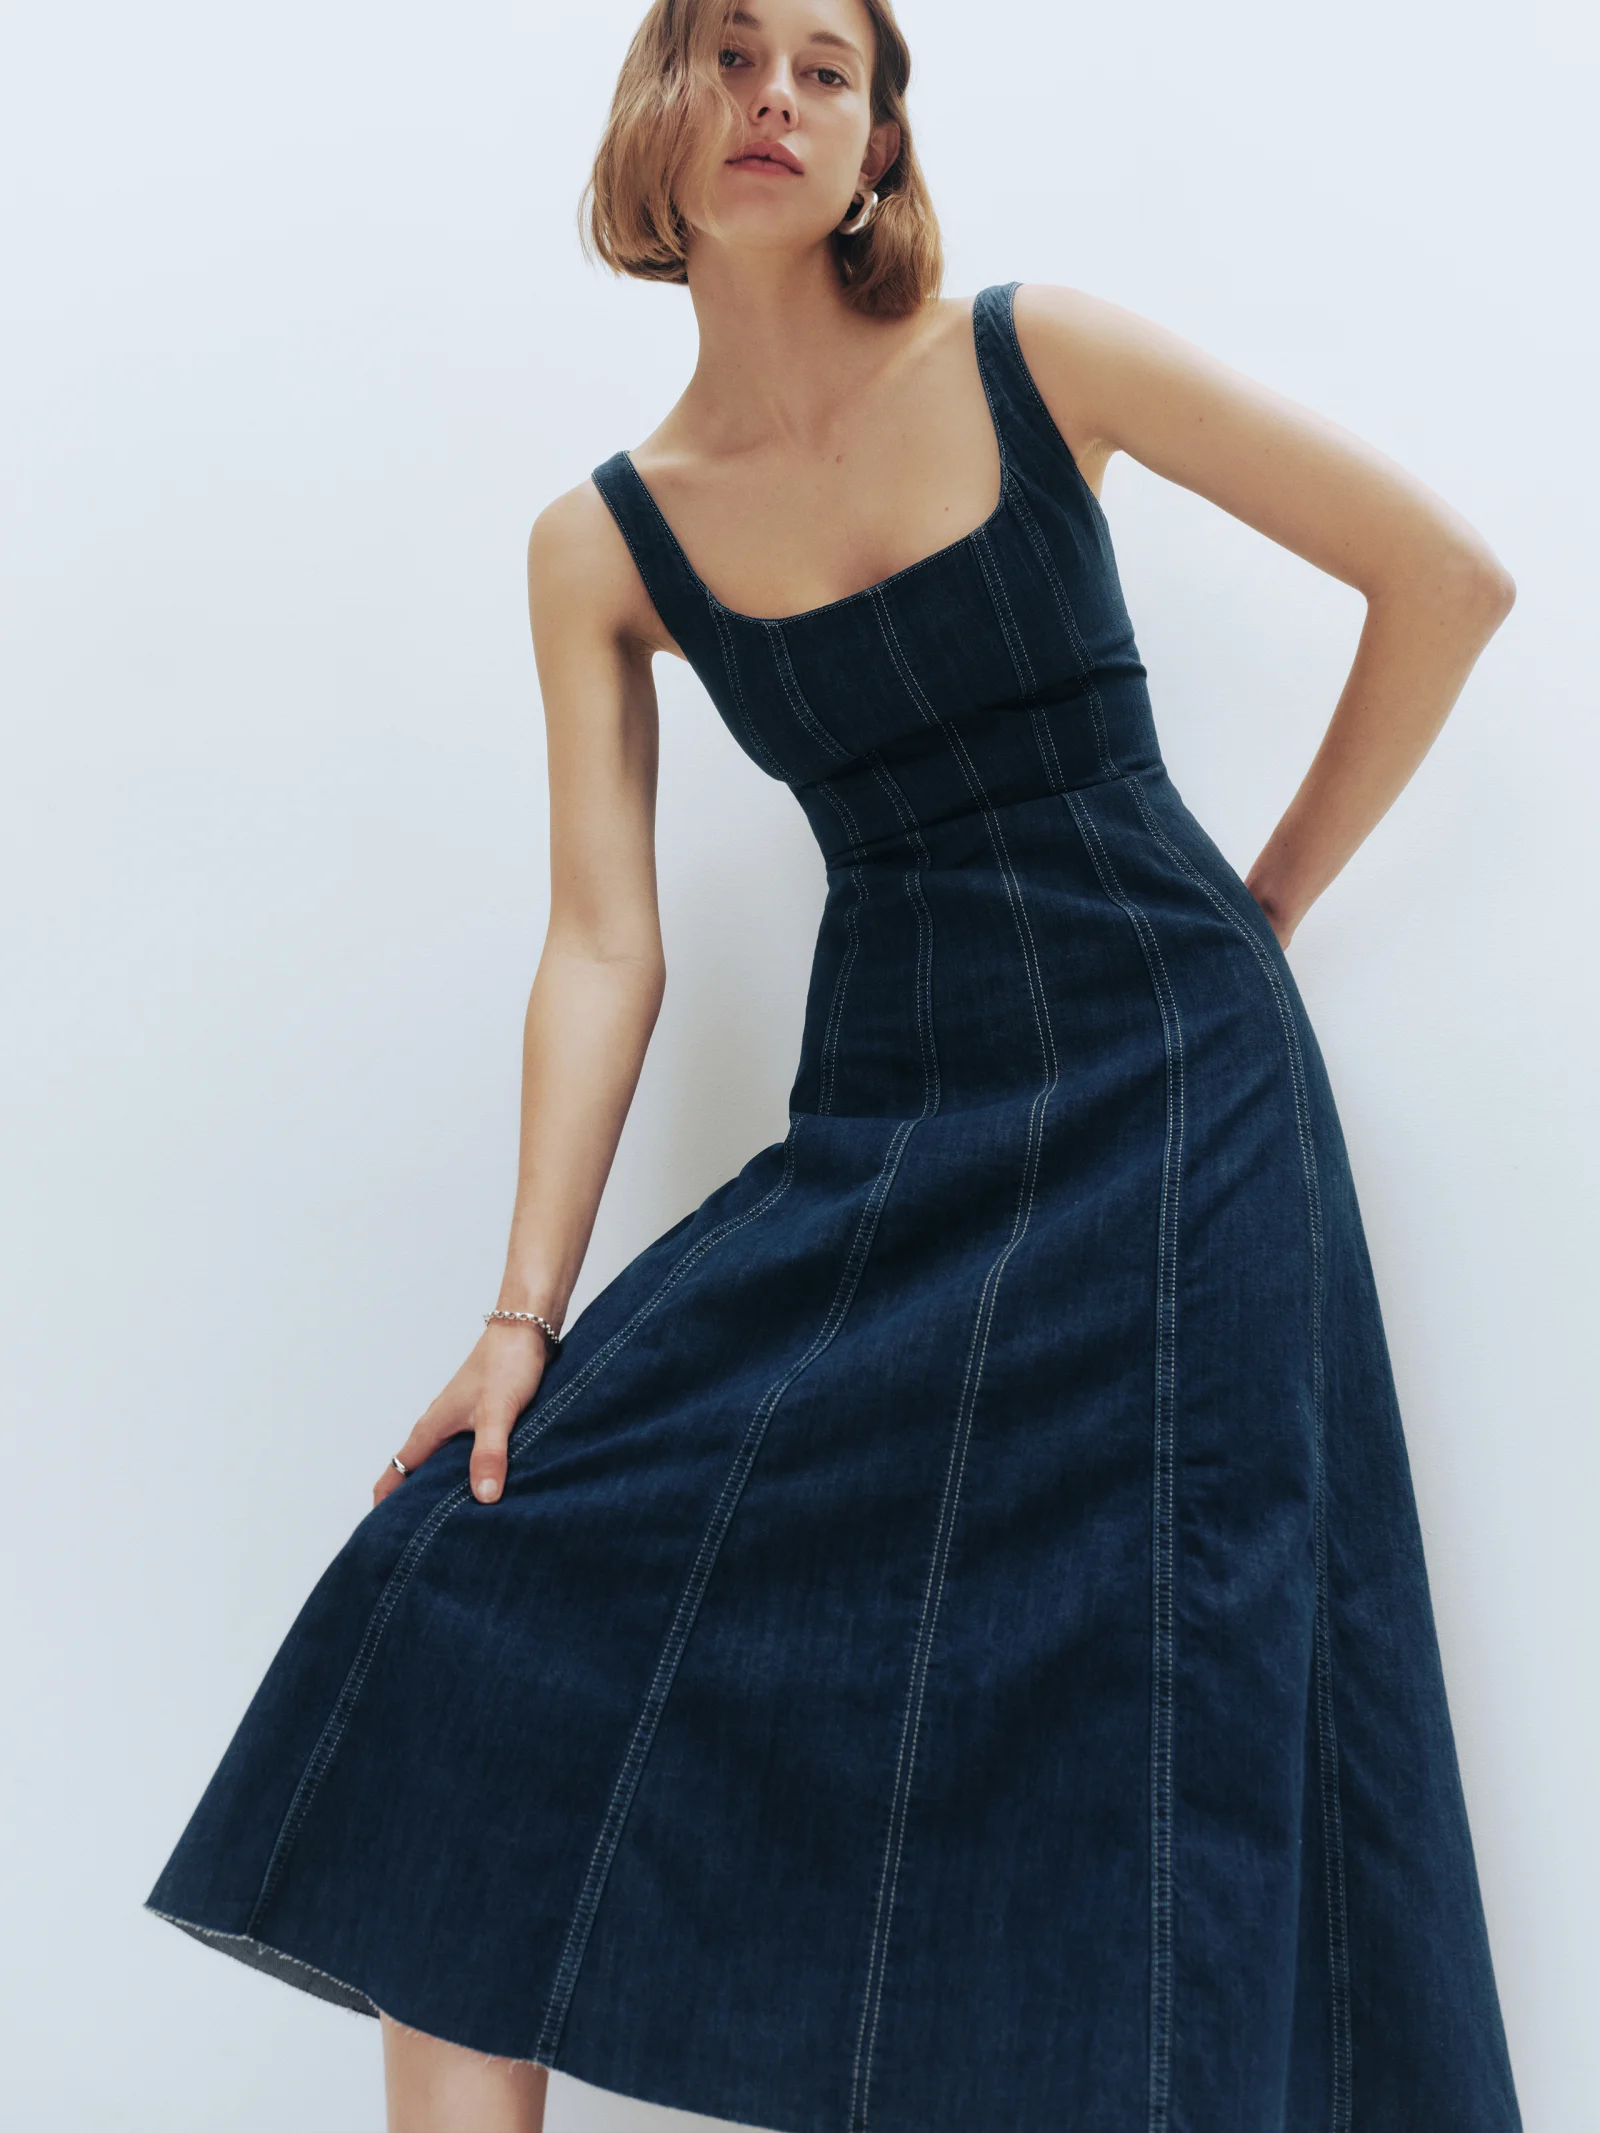 Denim Dress: Classic and Versatile Fashion Staples